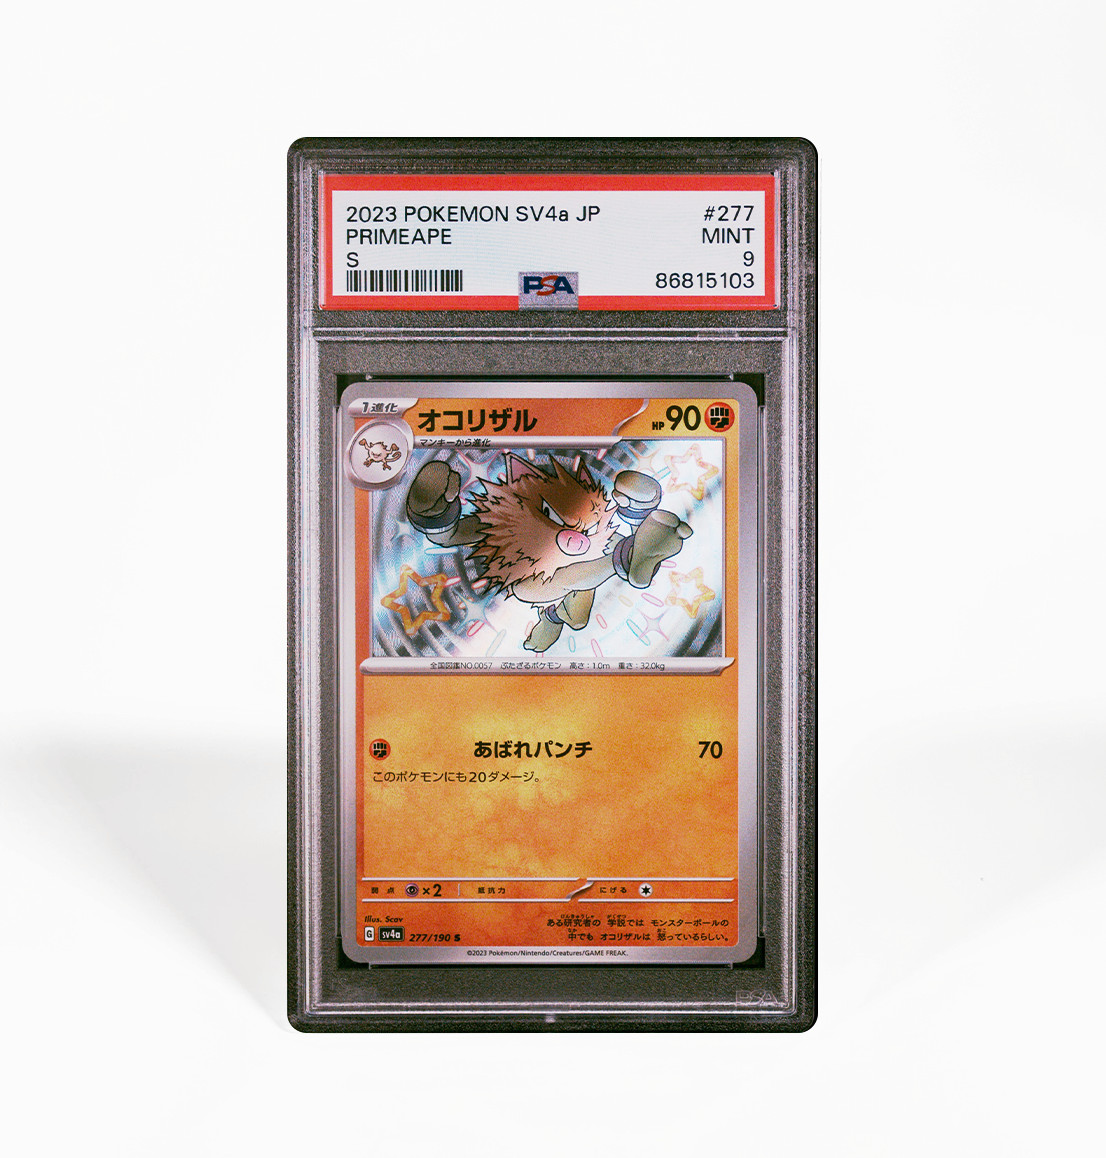 PSA Sequential Set Mankey, Primeape & Annihilape SV4a Shiny Treasure ex Pokemon cards